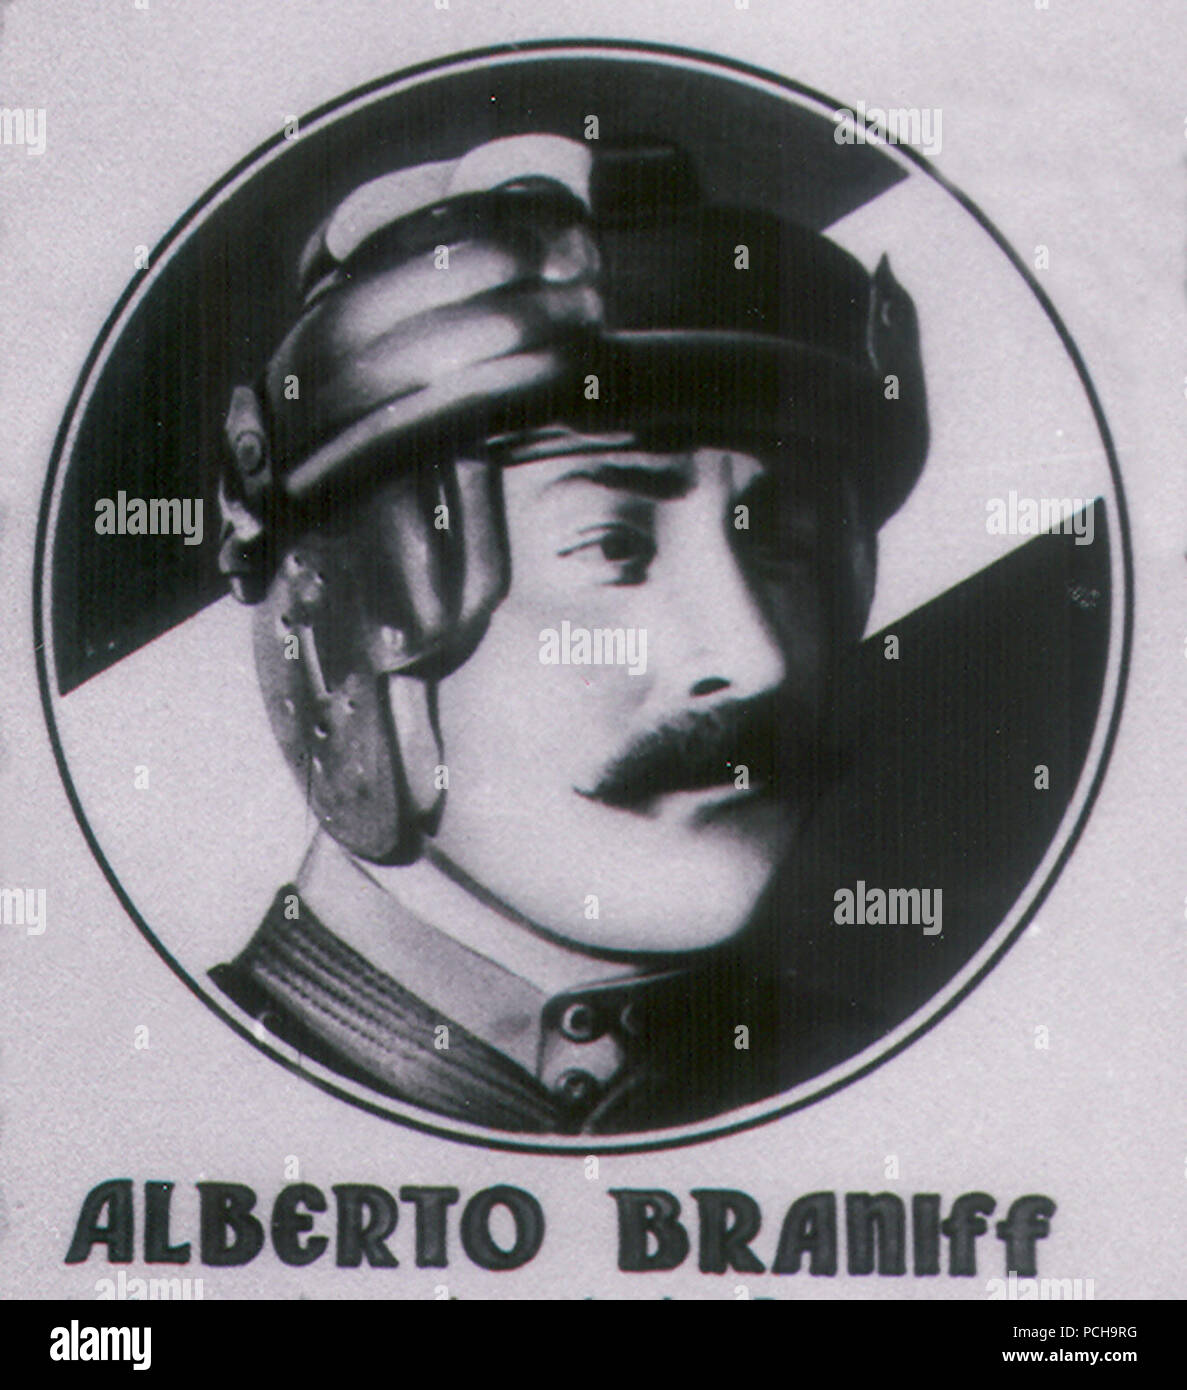 Alberto Braniff. Stock Photo